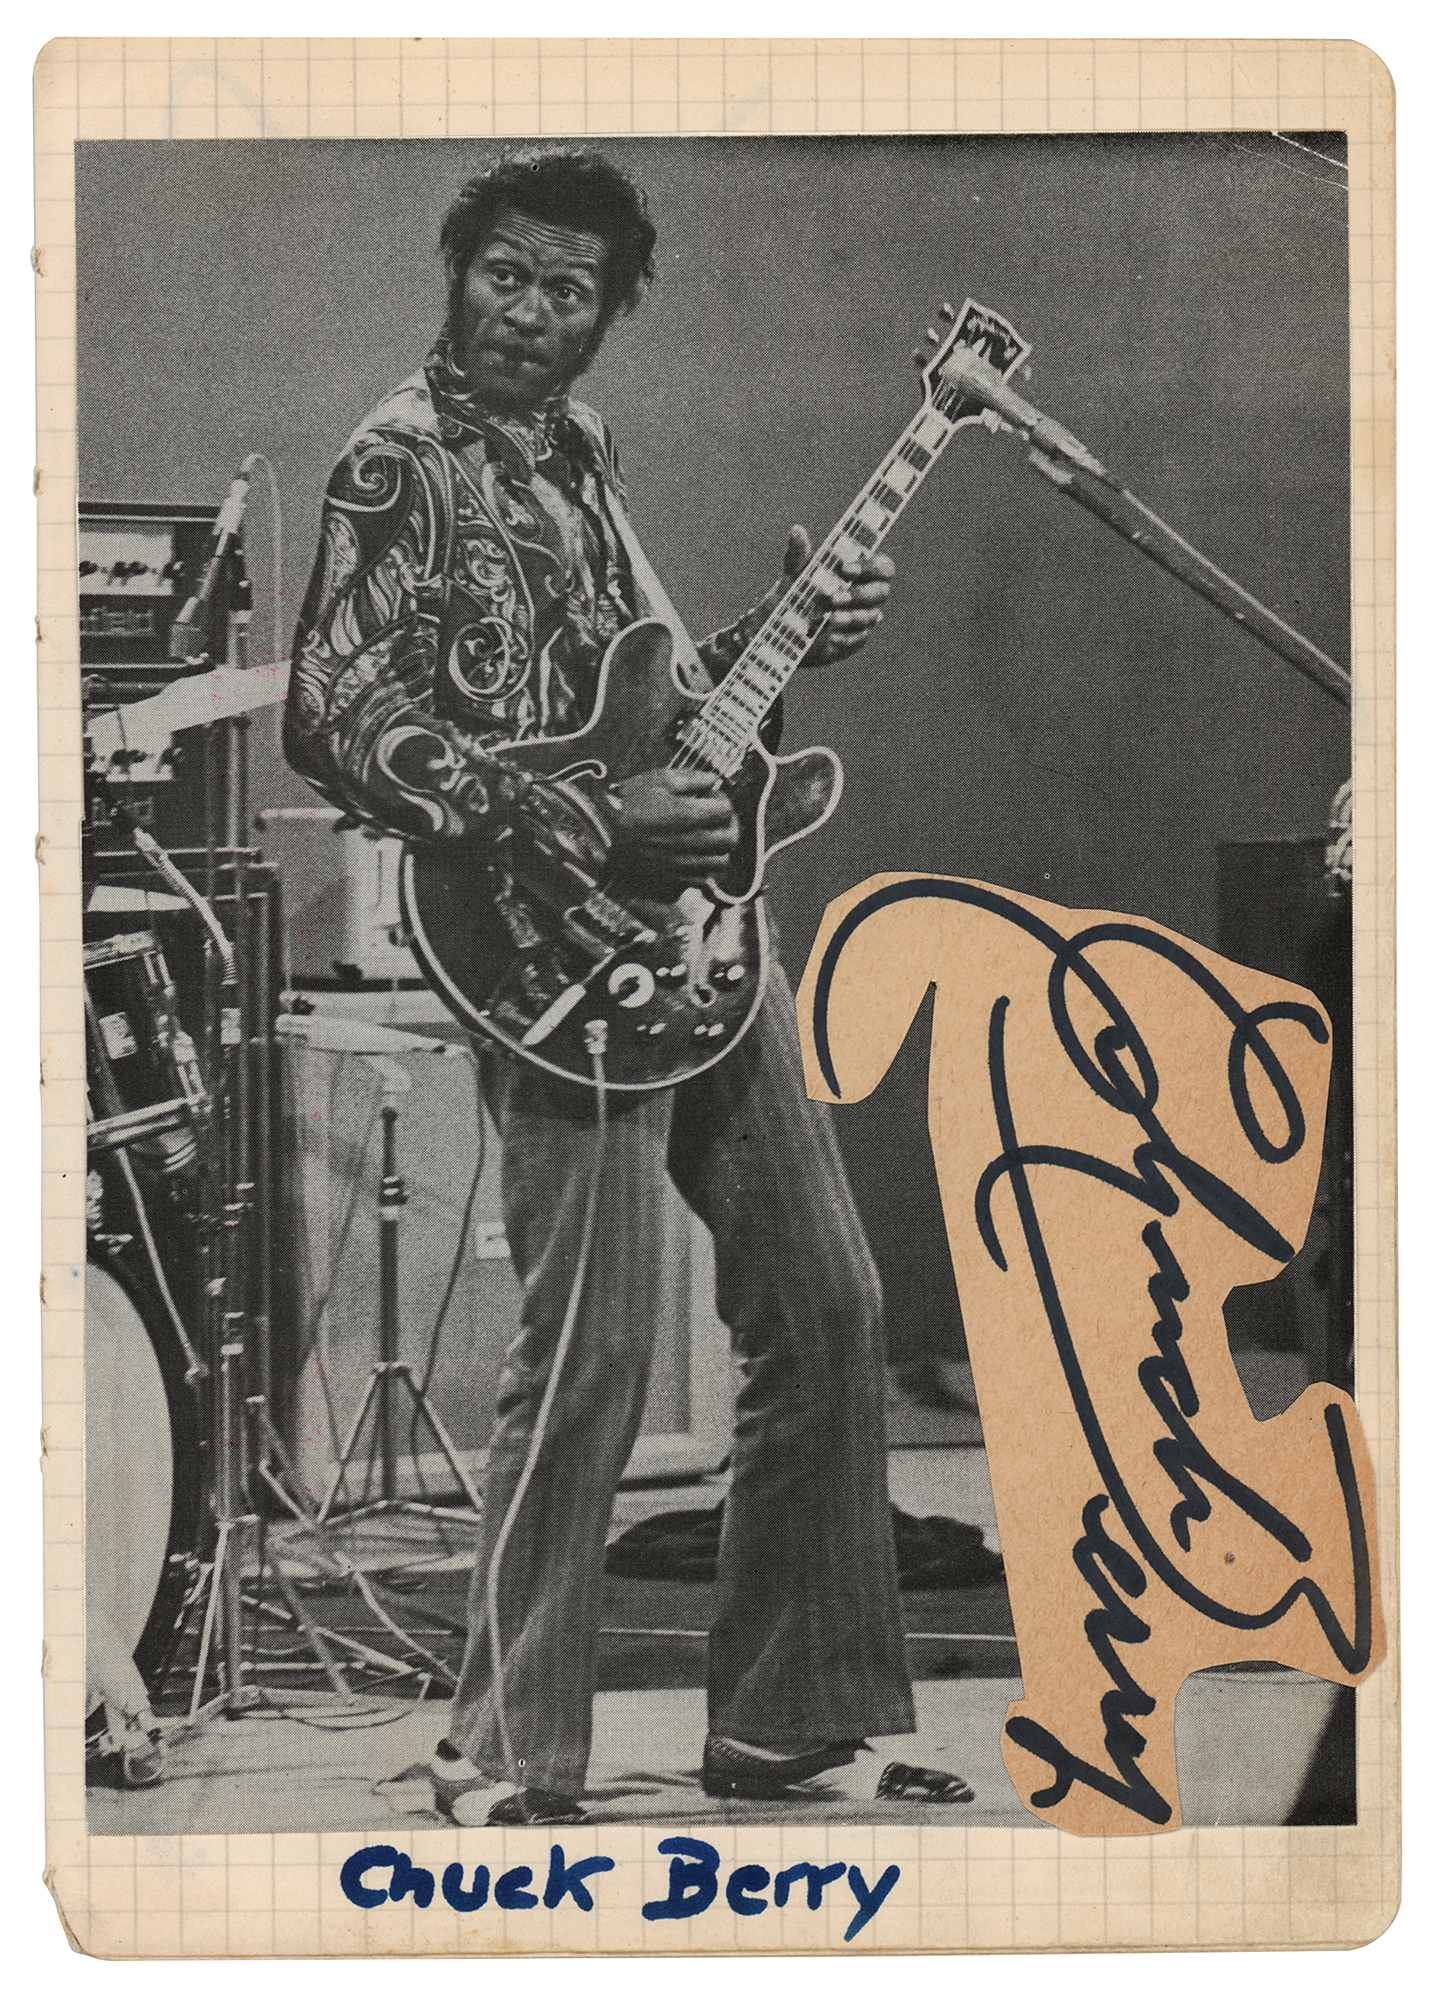 Lot #2188 Chuck Berry Signature